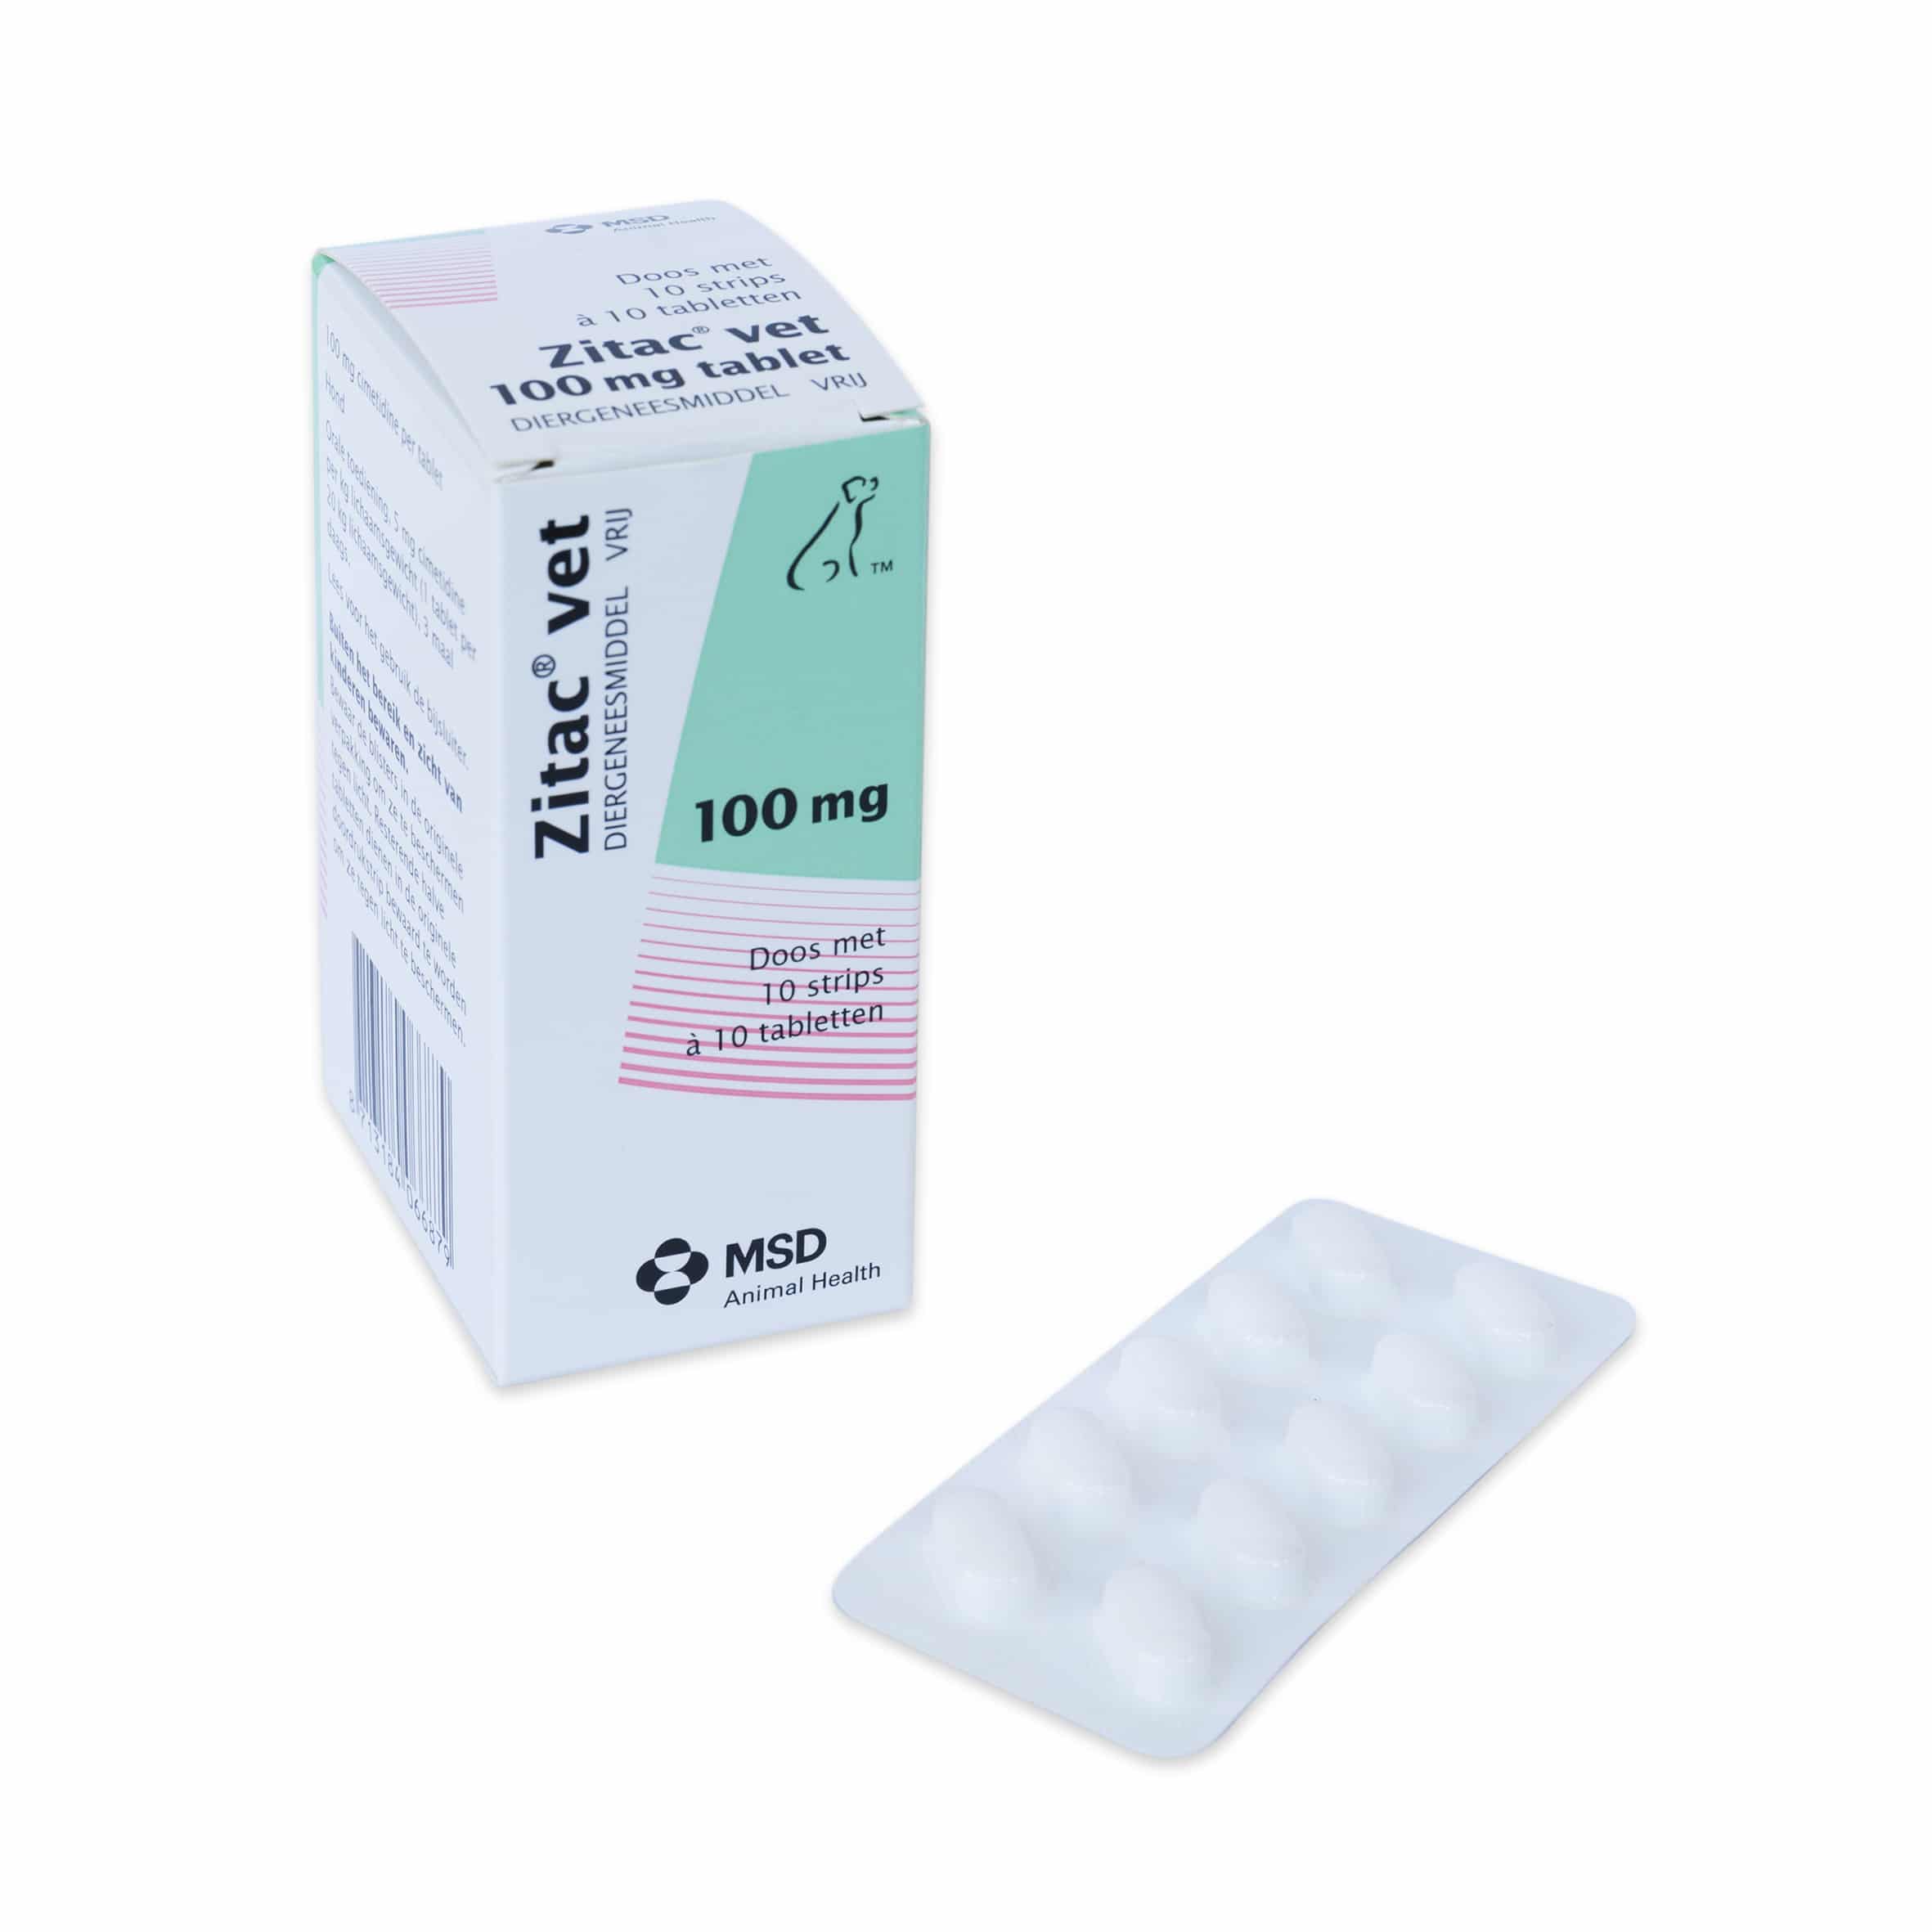 Zitac-vet Zitac Vet 100 mg 2 x 10 tabletten